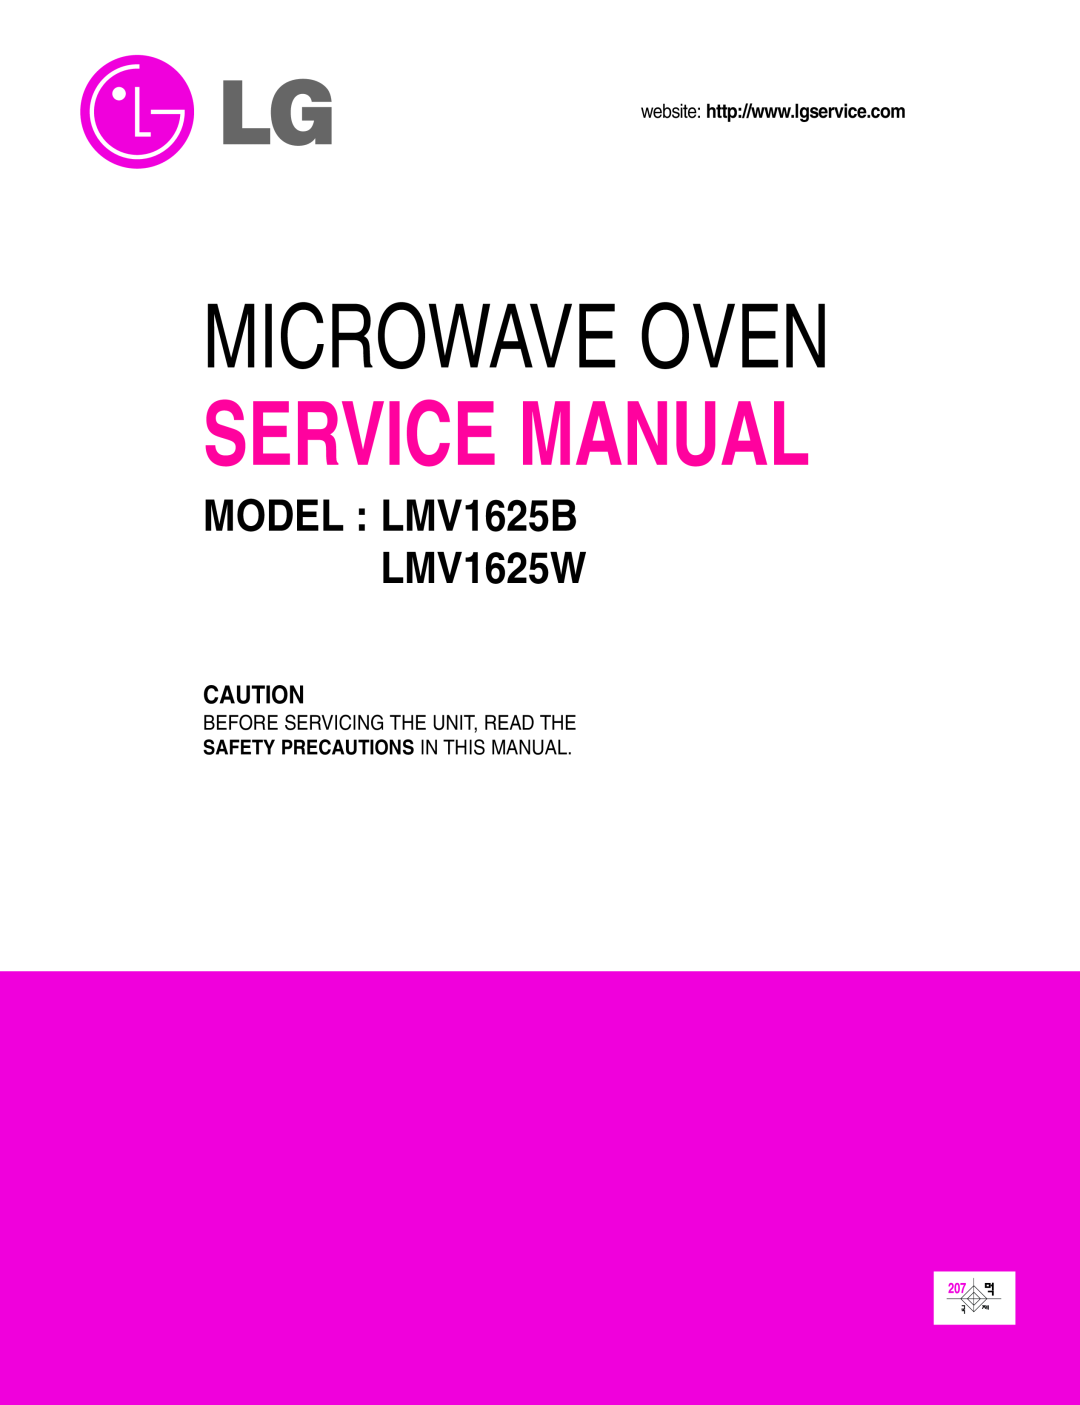 LG Electronics service manual Microwave Oven, Service Manual, MODEL LMV1625B LMV1625W 